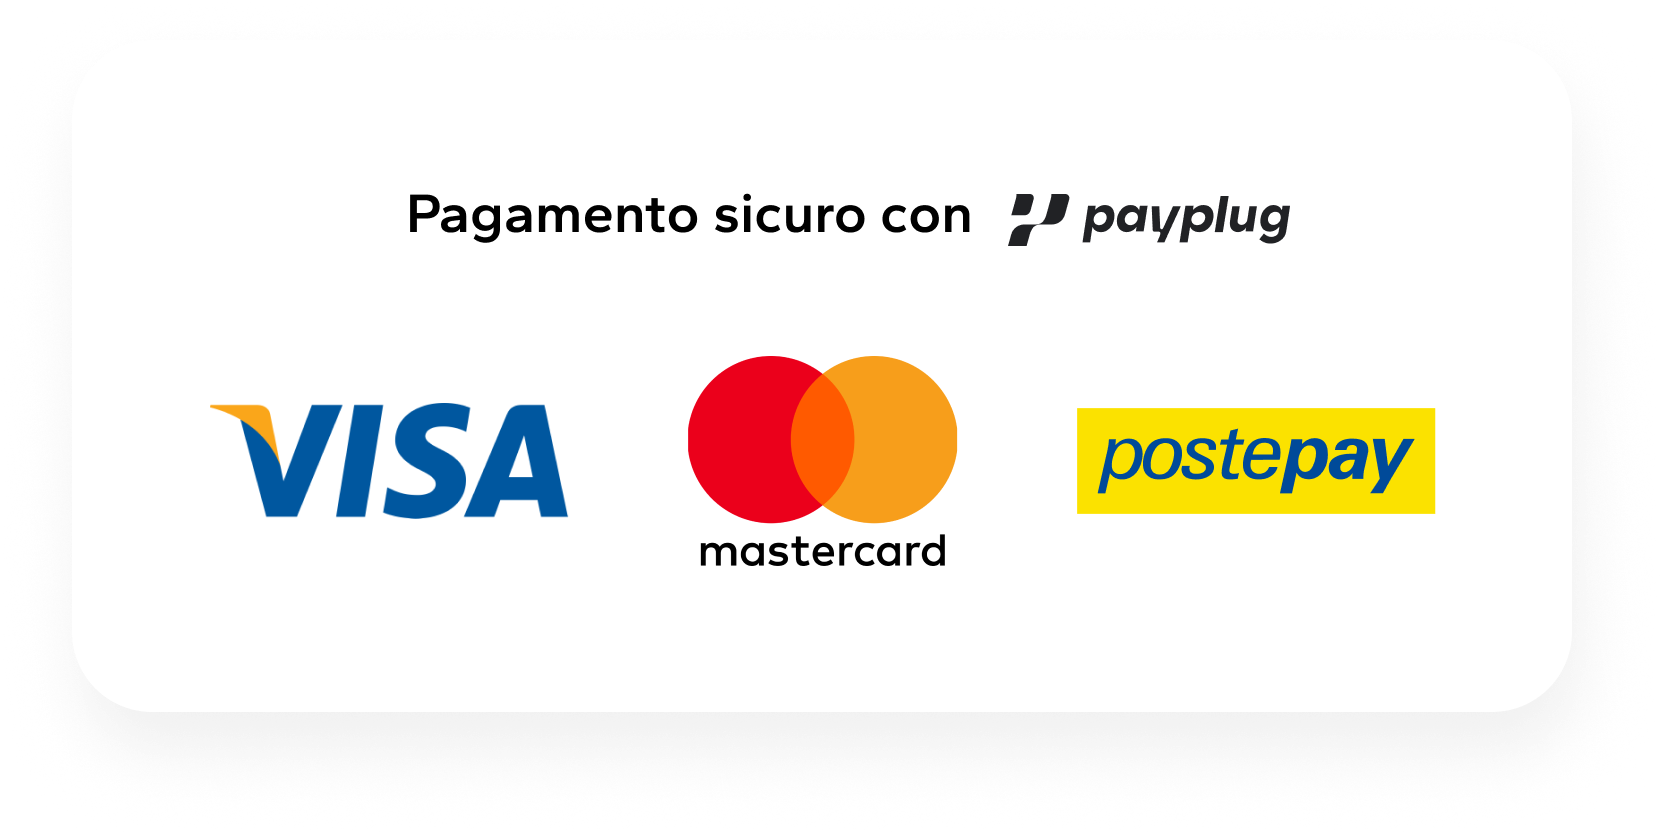 visa_mastercard_postepay_IT